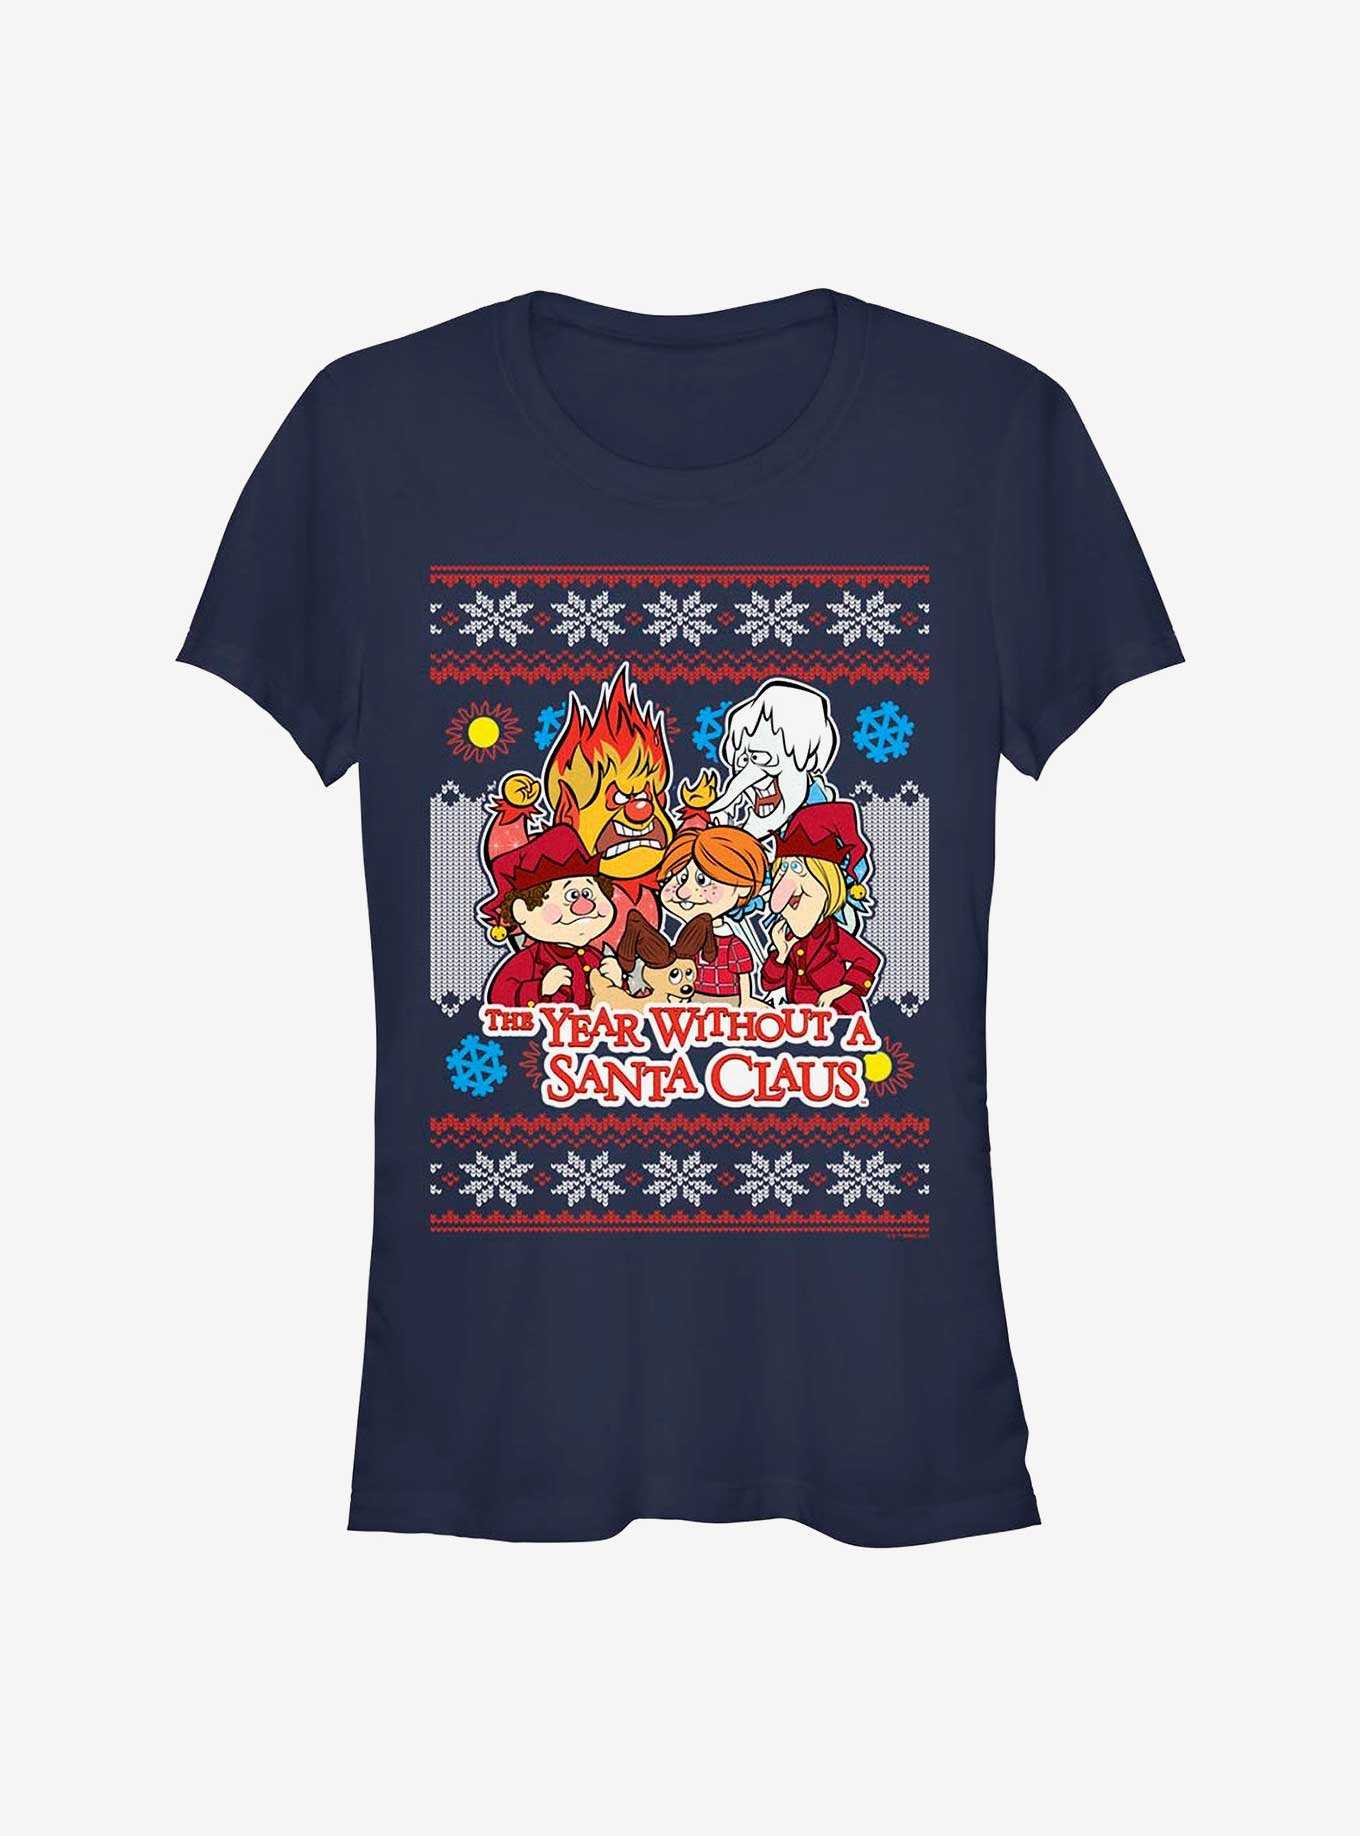 The Year Without A Santa Claus Christmas Gang Girls T-Shirt, , hi-res